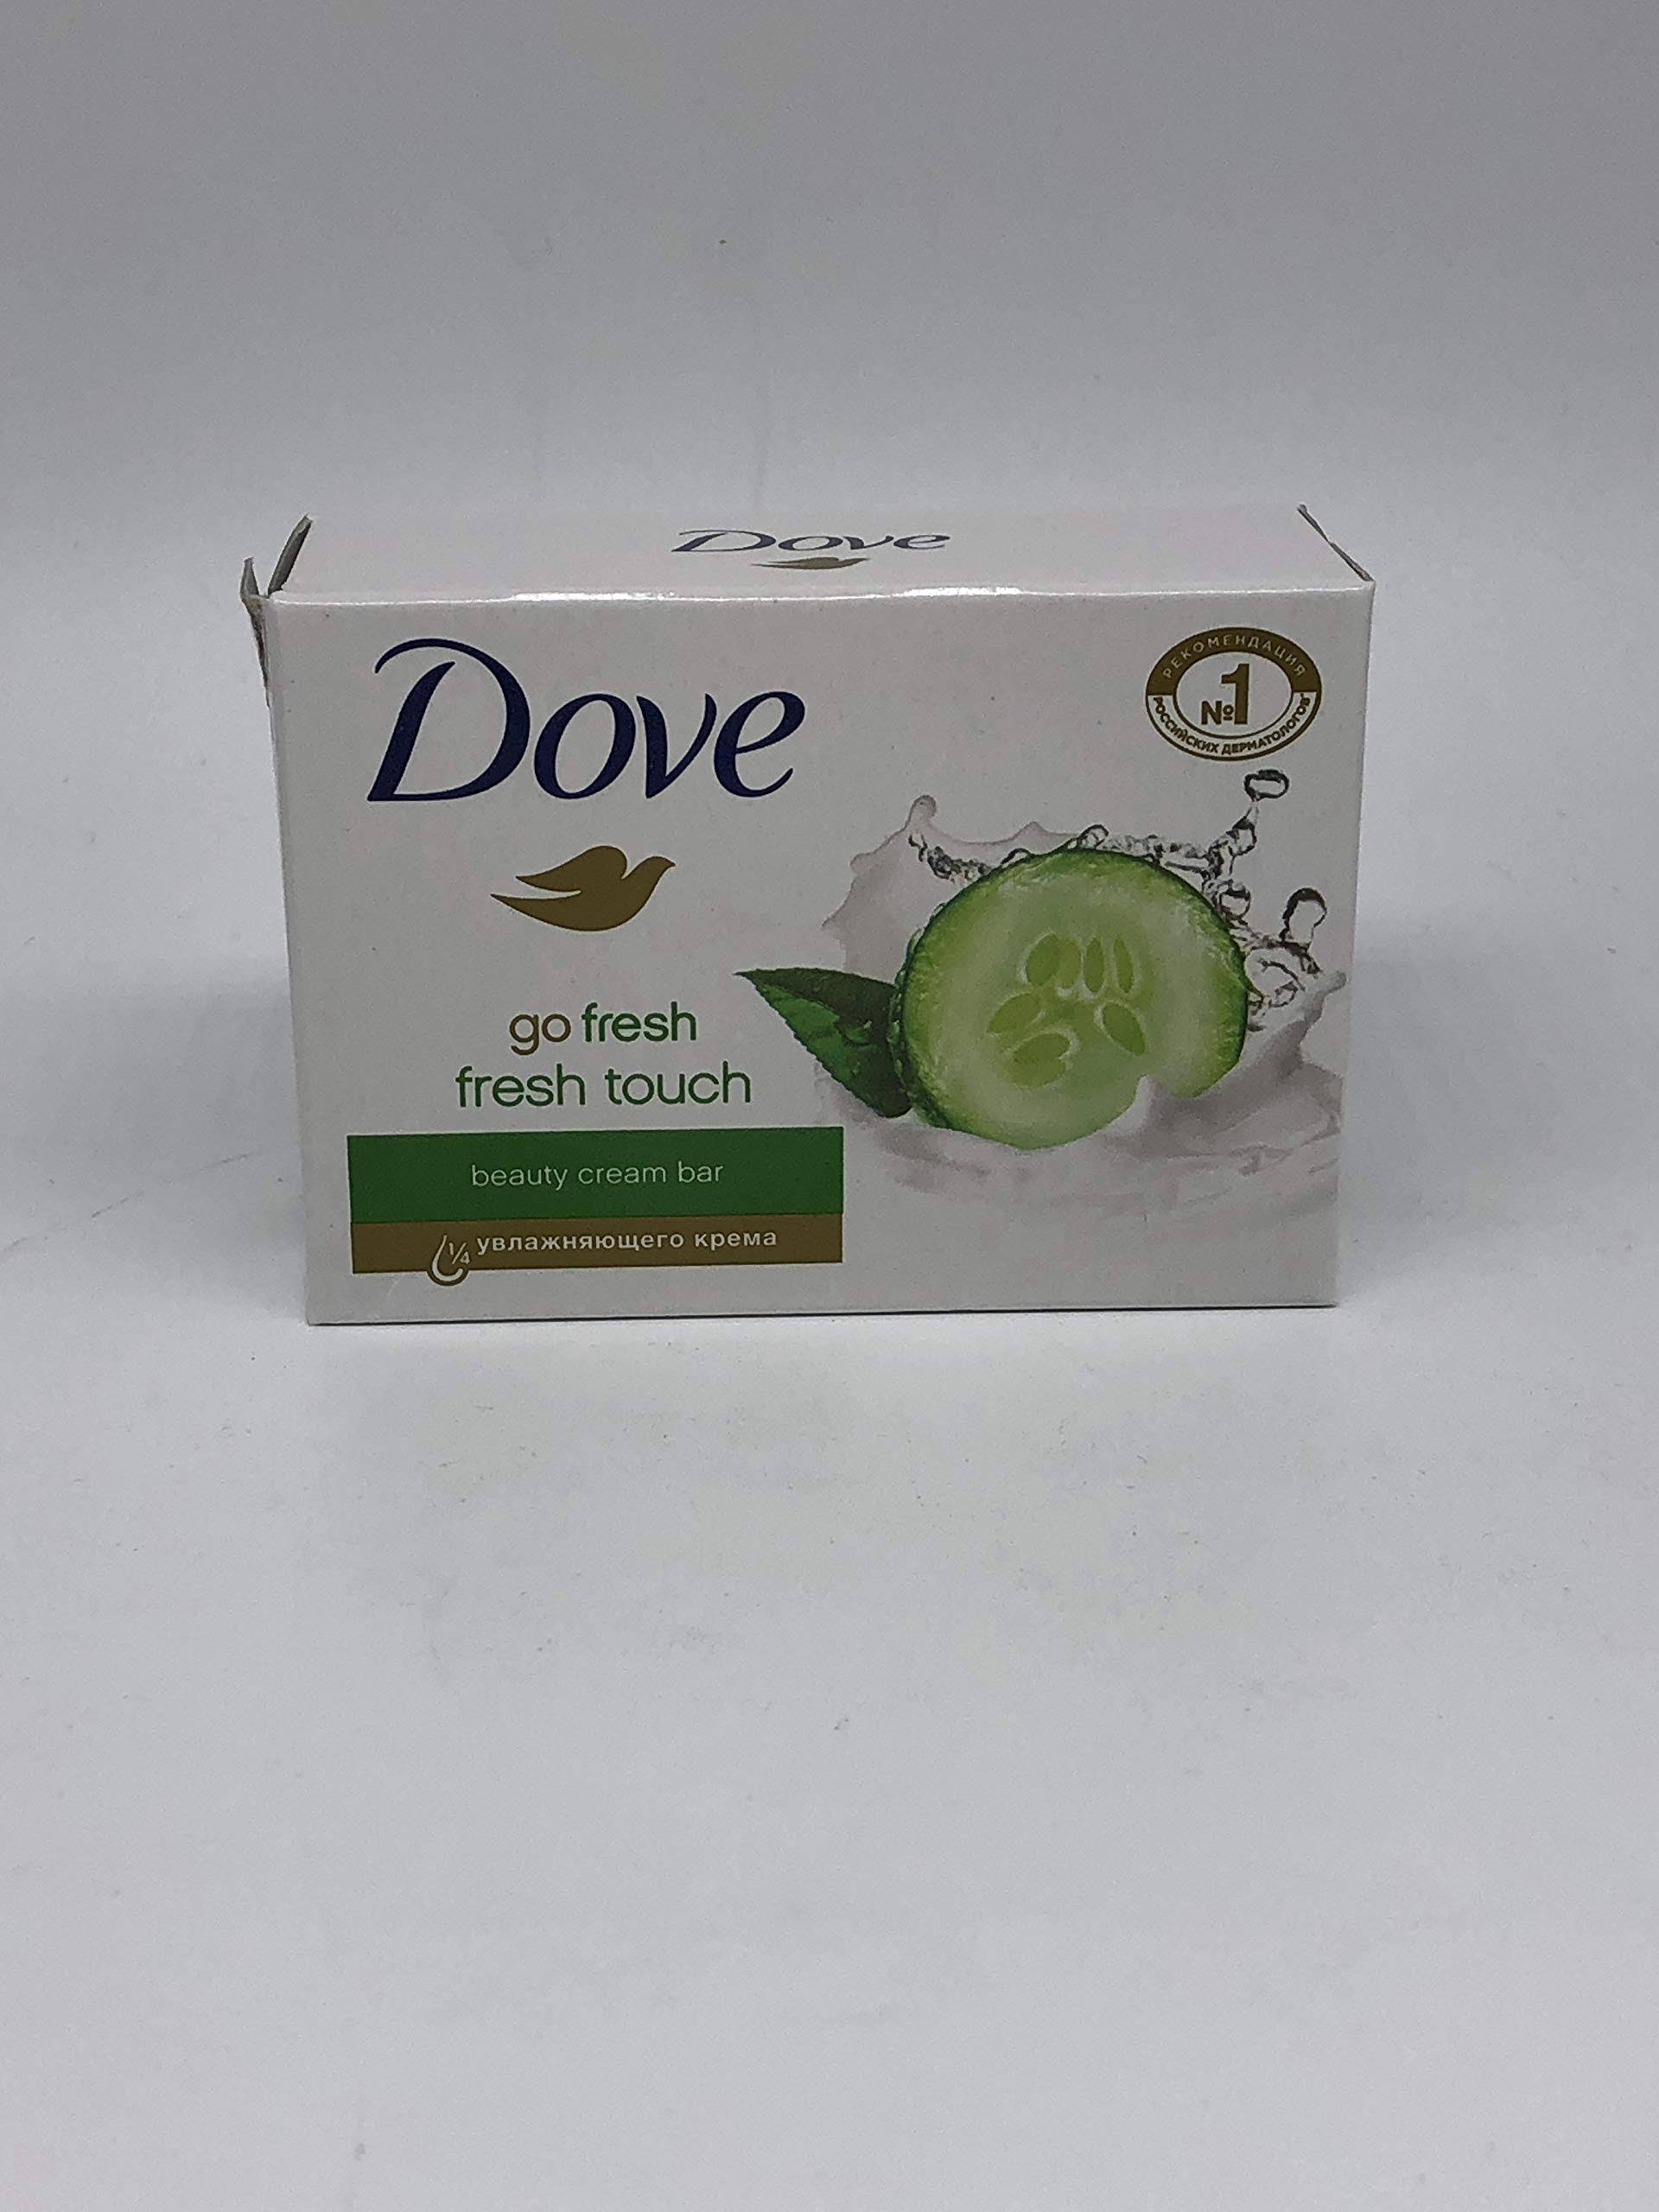 Dove Beauty Cream Bar Soap - 4.75oz, Go Fresh